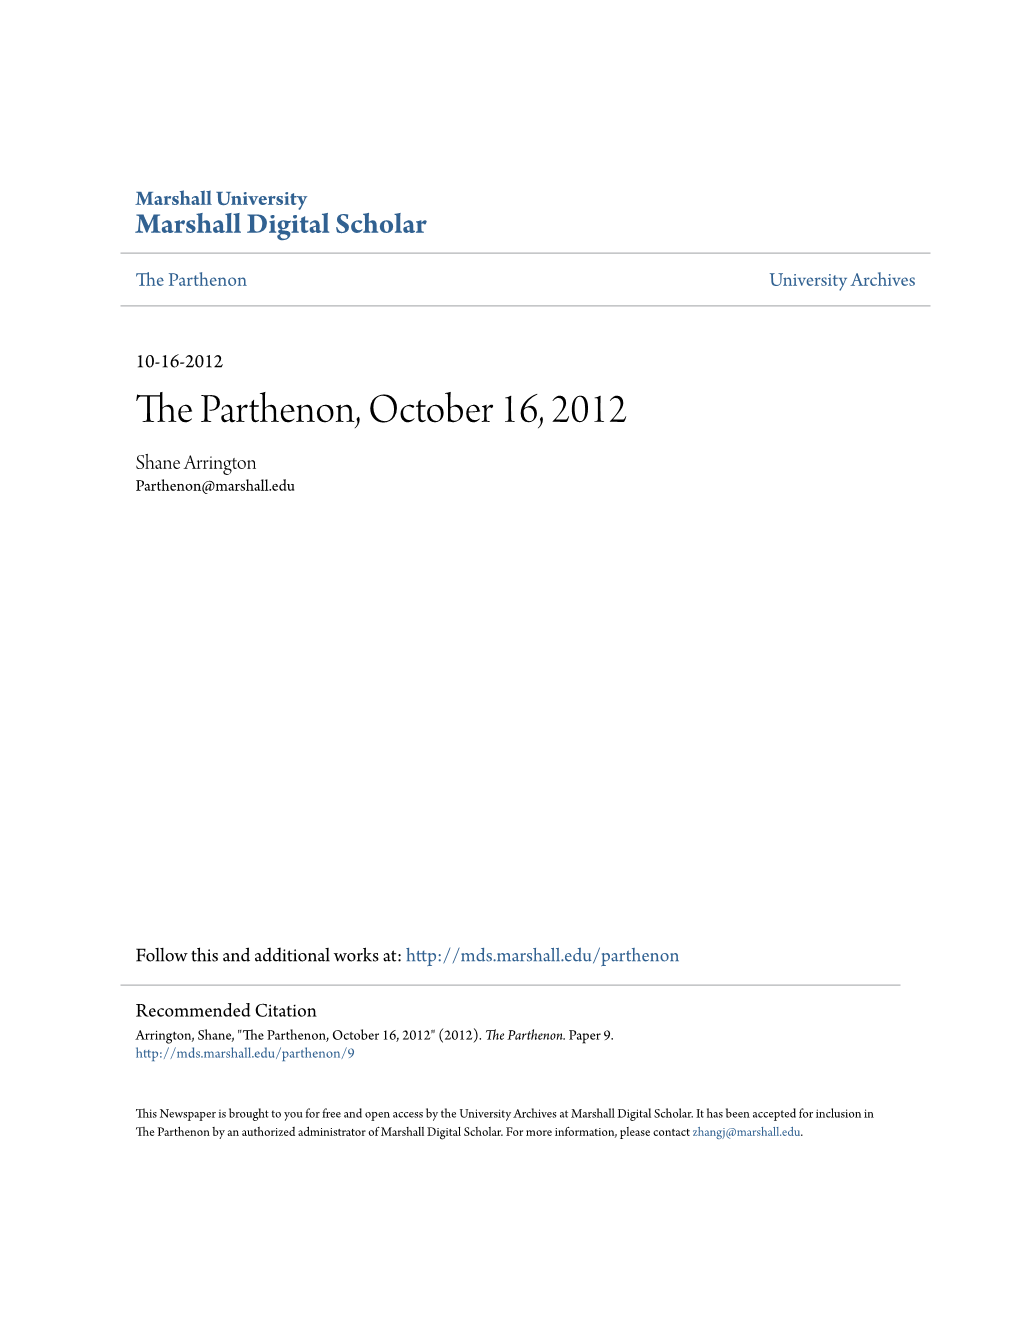 The Parthenon, October 16, 2012